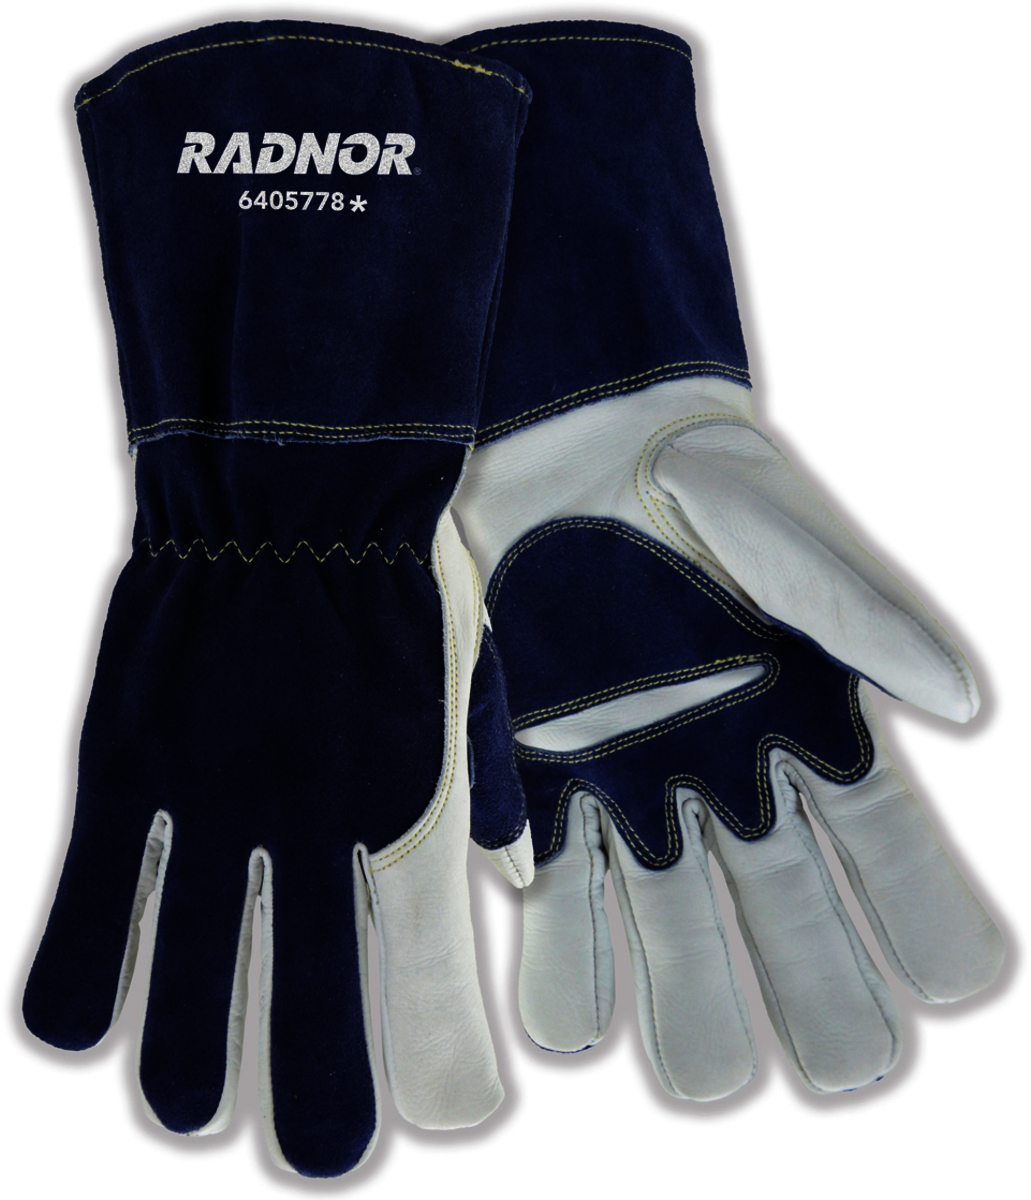 Airgas - Premium - White Fleece Gloves MIG RAD64057782 3/4\